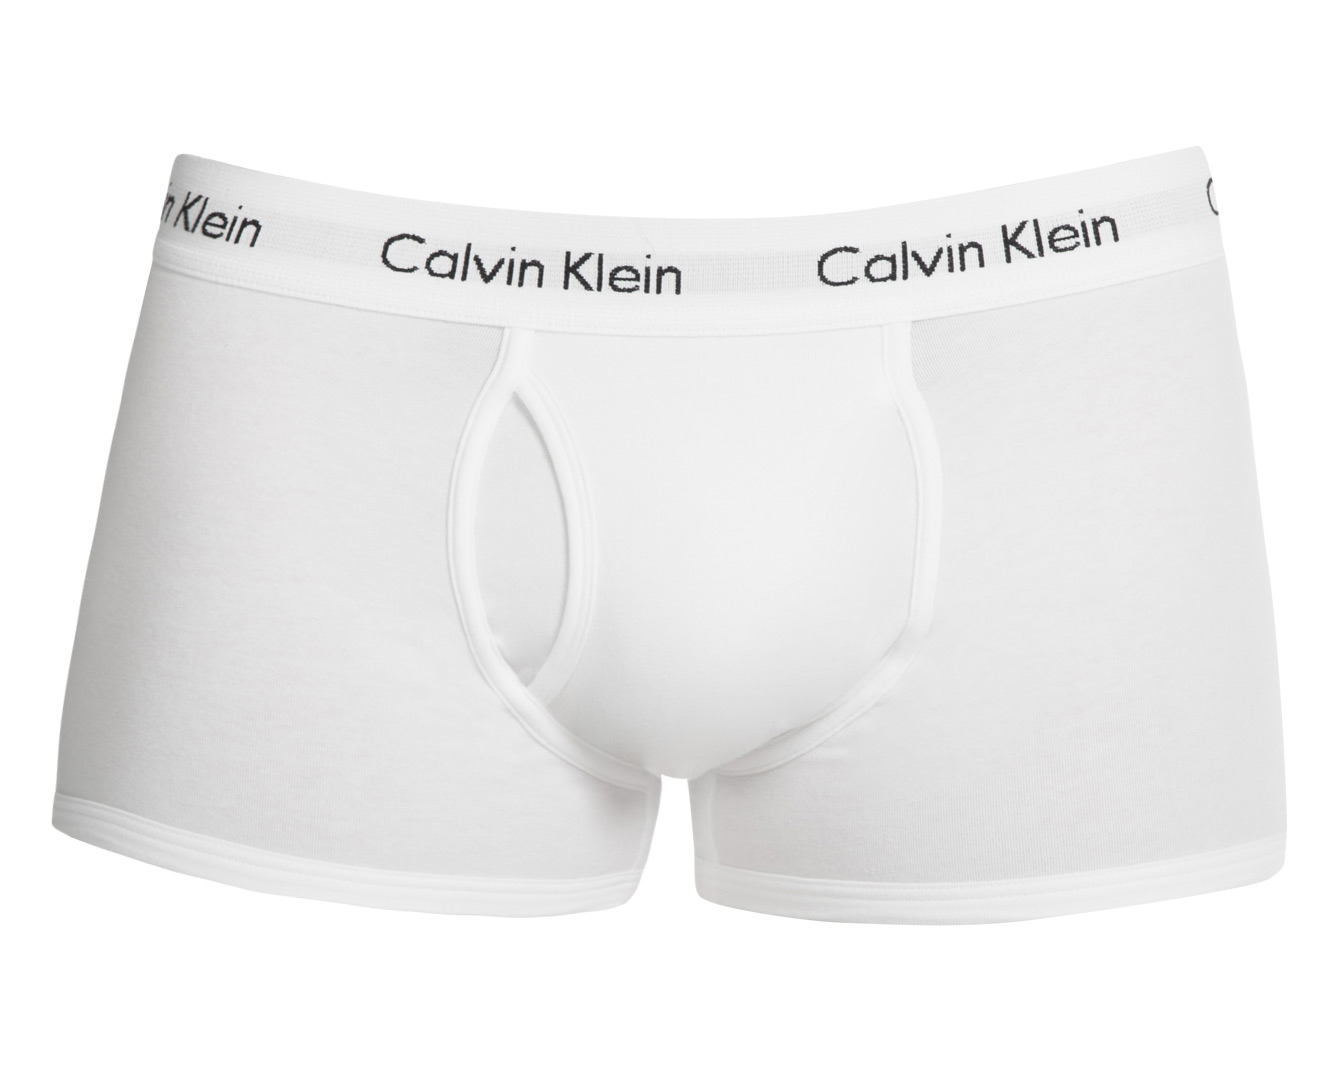 Calvin Klein Men's Modern Essentials Trunk - White | Catch.com.au